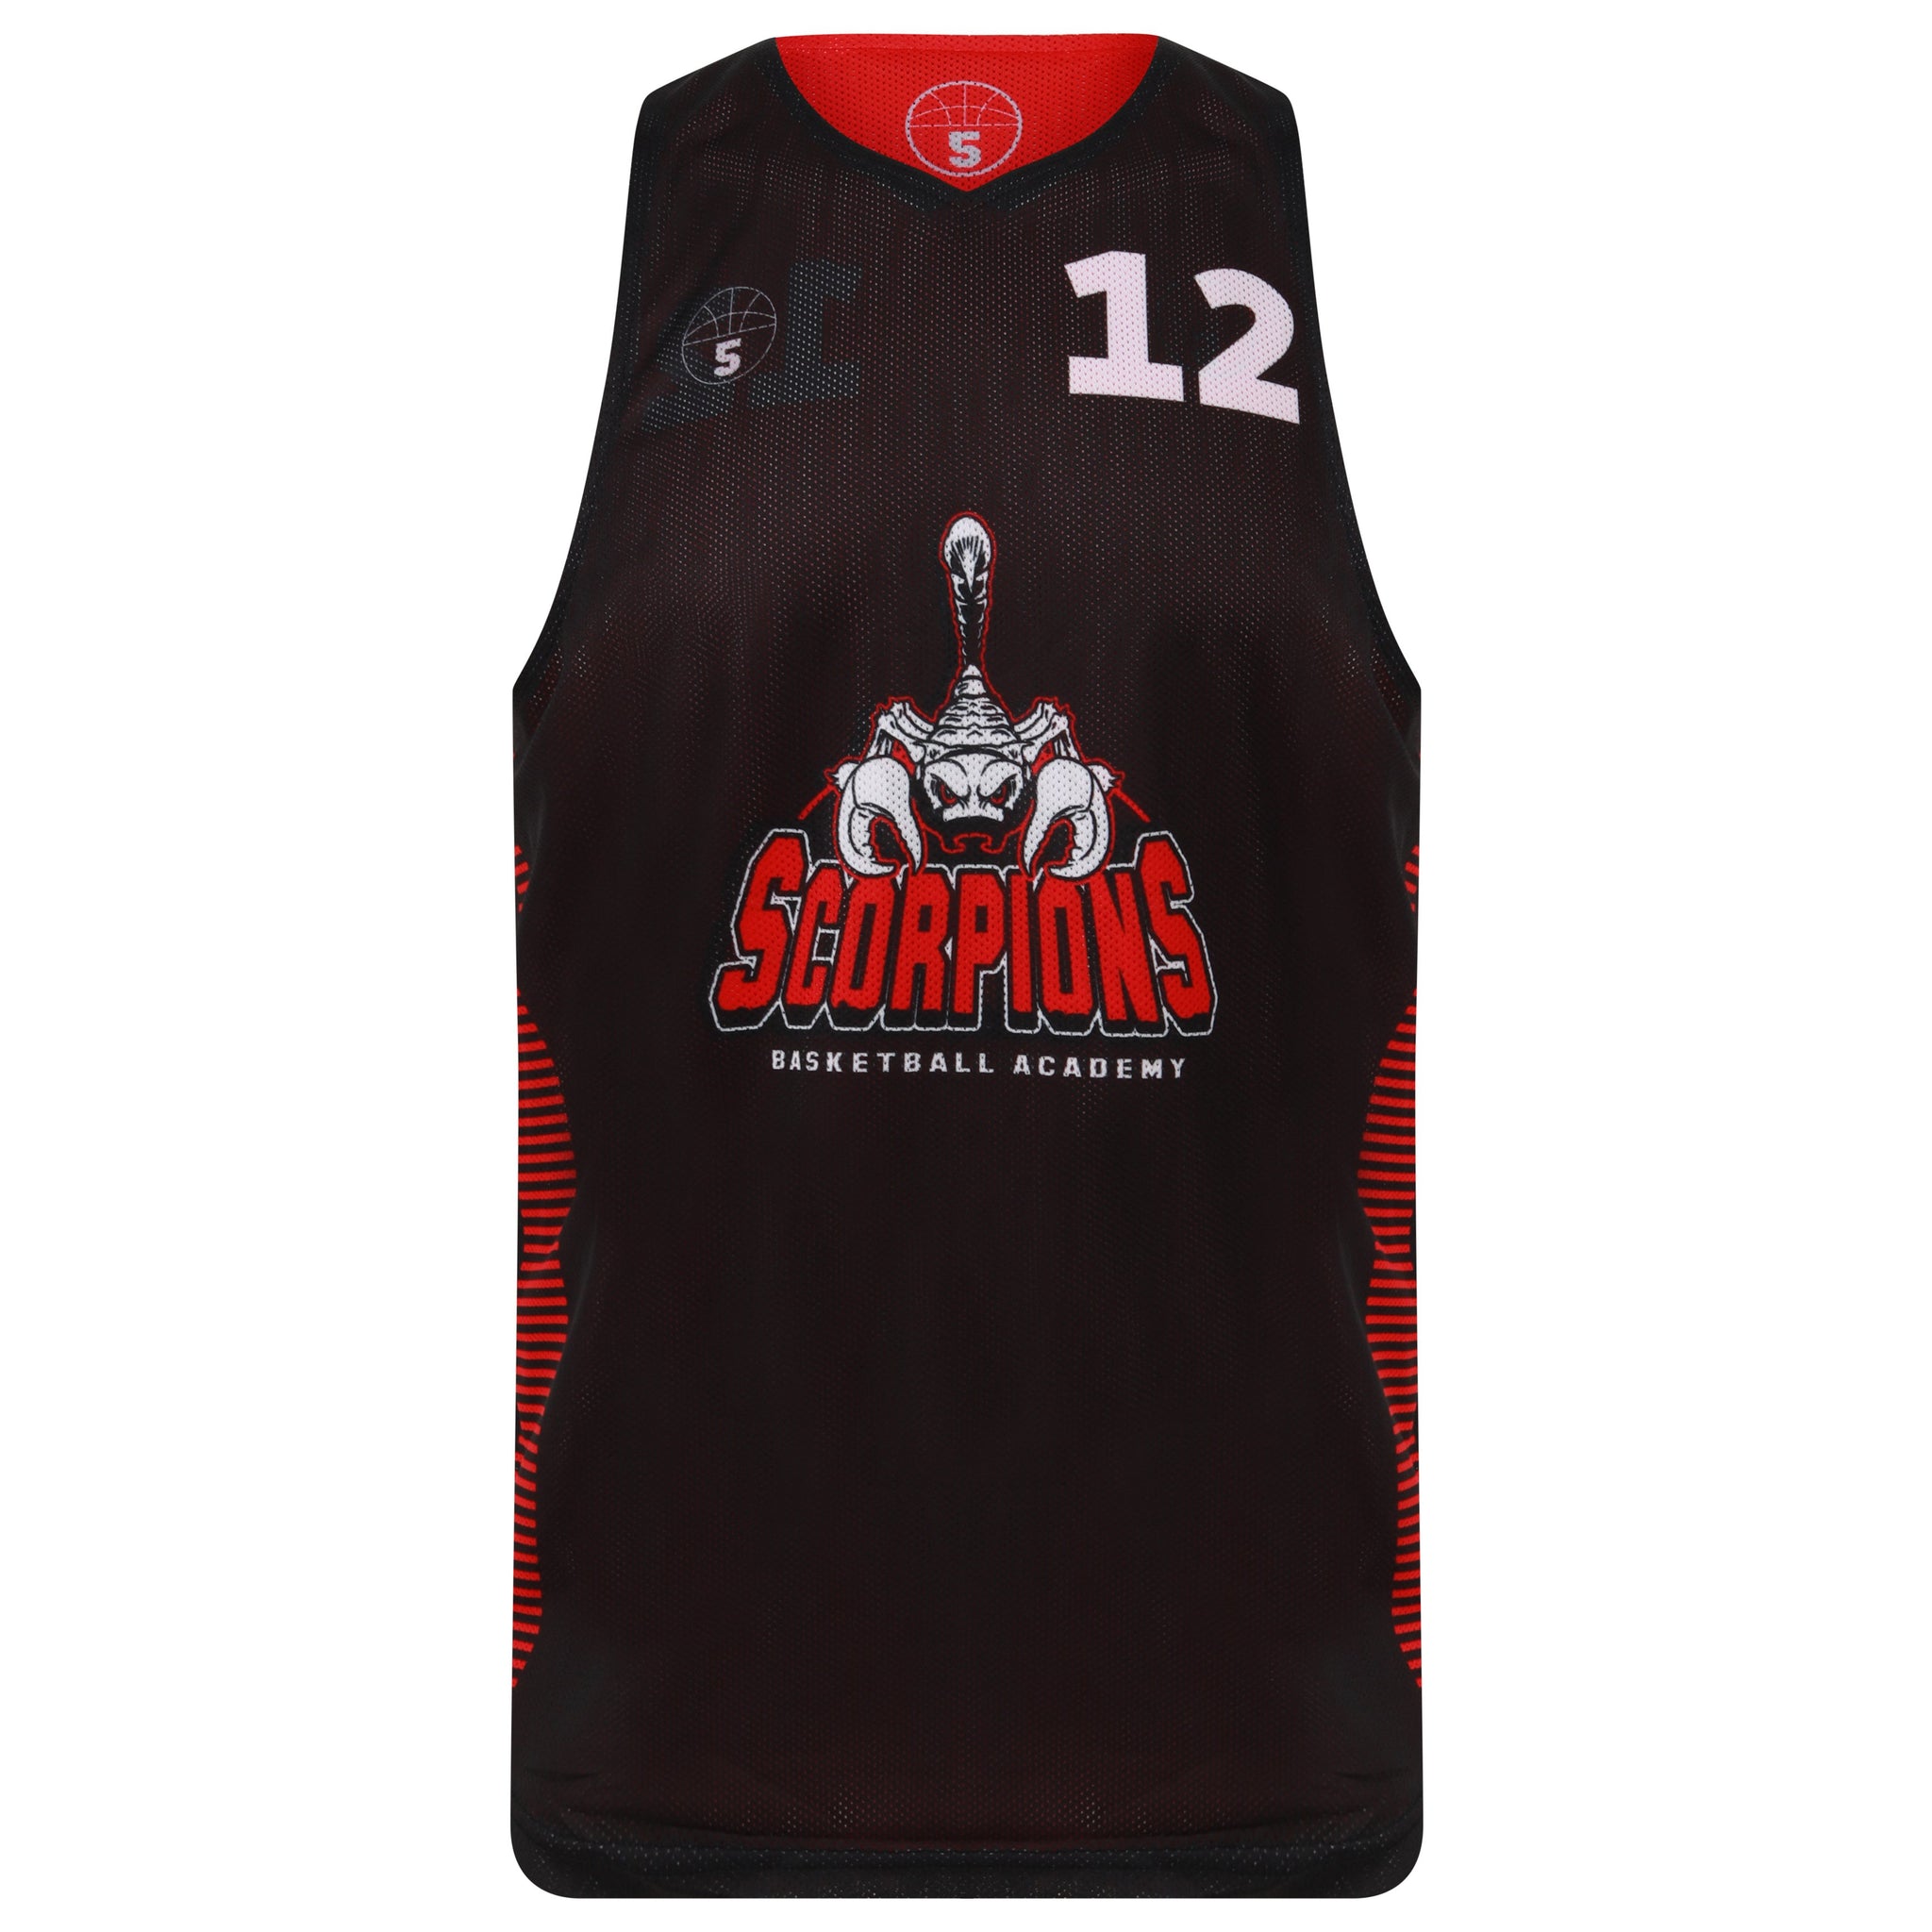 STARTING 5 Sublimated Mesh Basketball Reversible Training Vest - You design it! (Min order 25) - Example 2